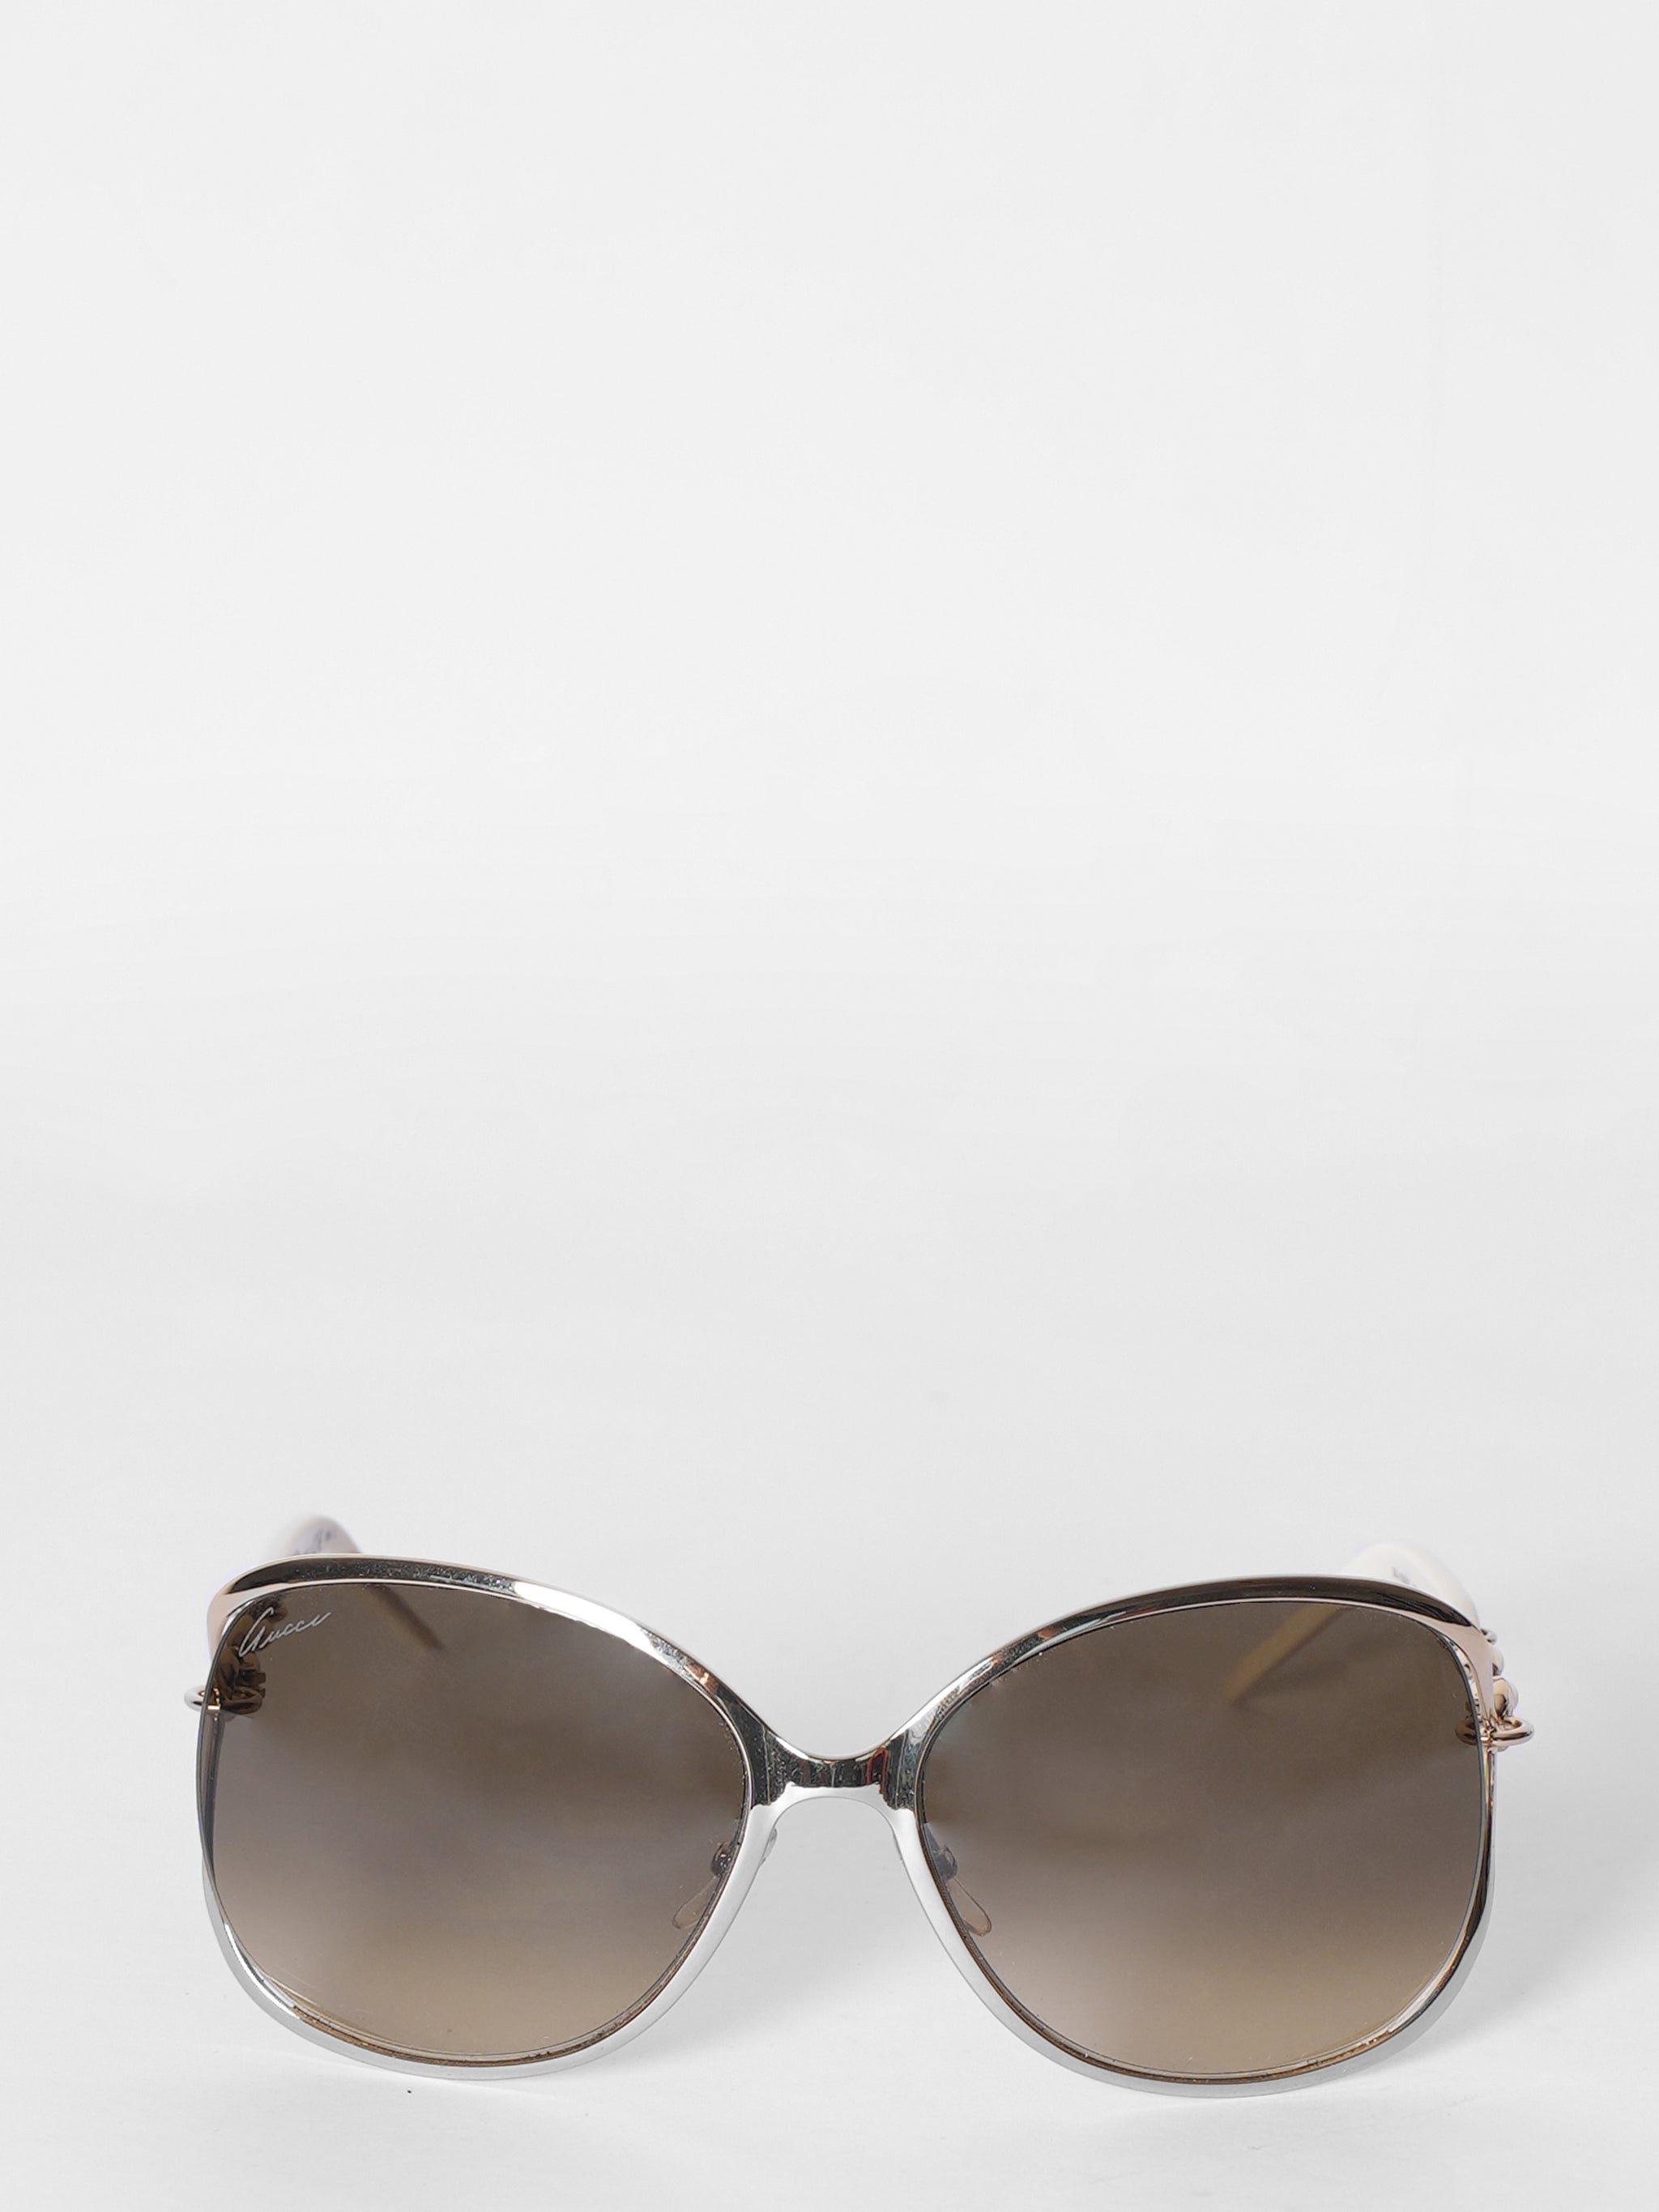 New Gucci Marina Chain Sunglasses